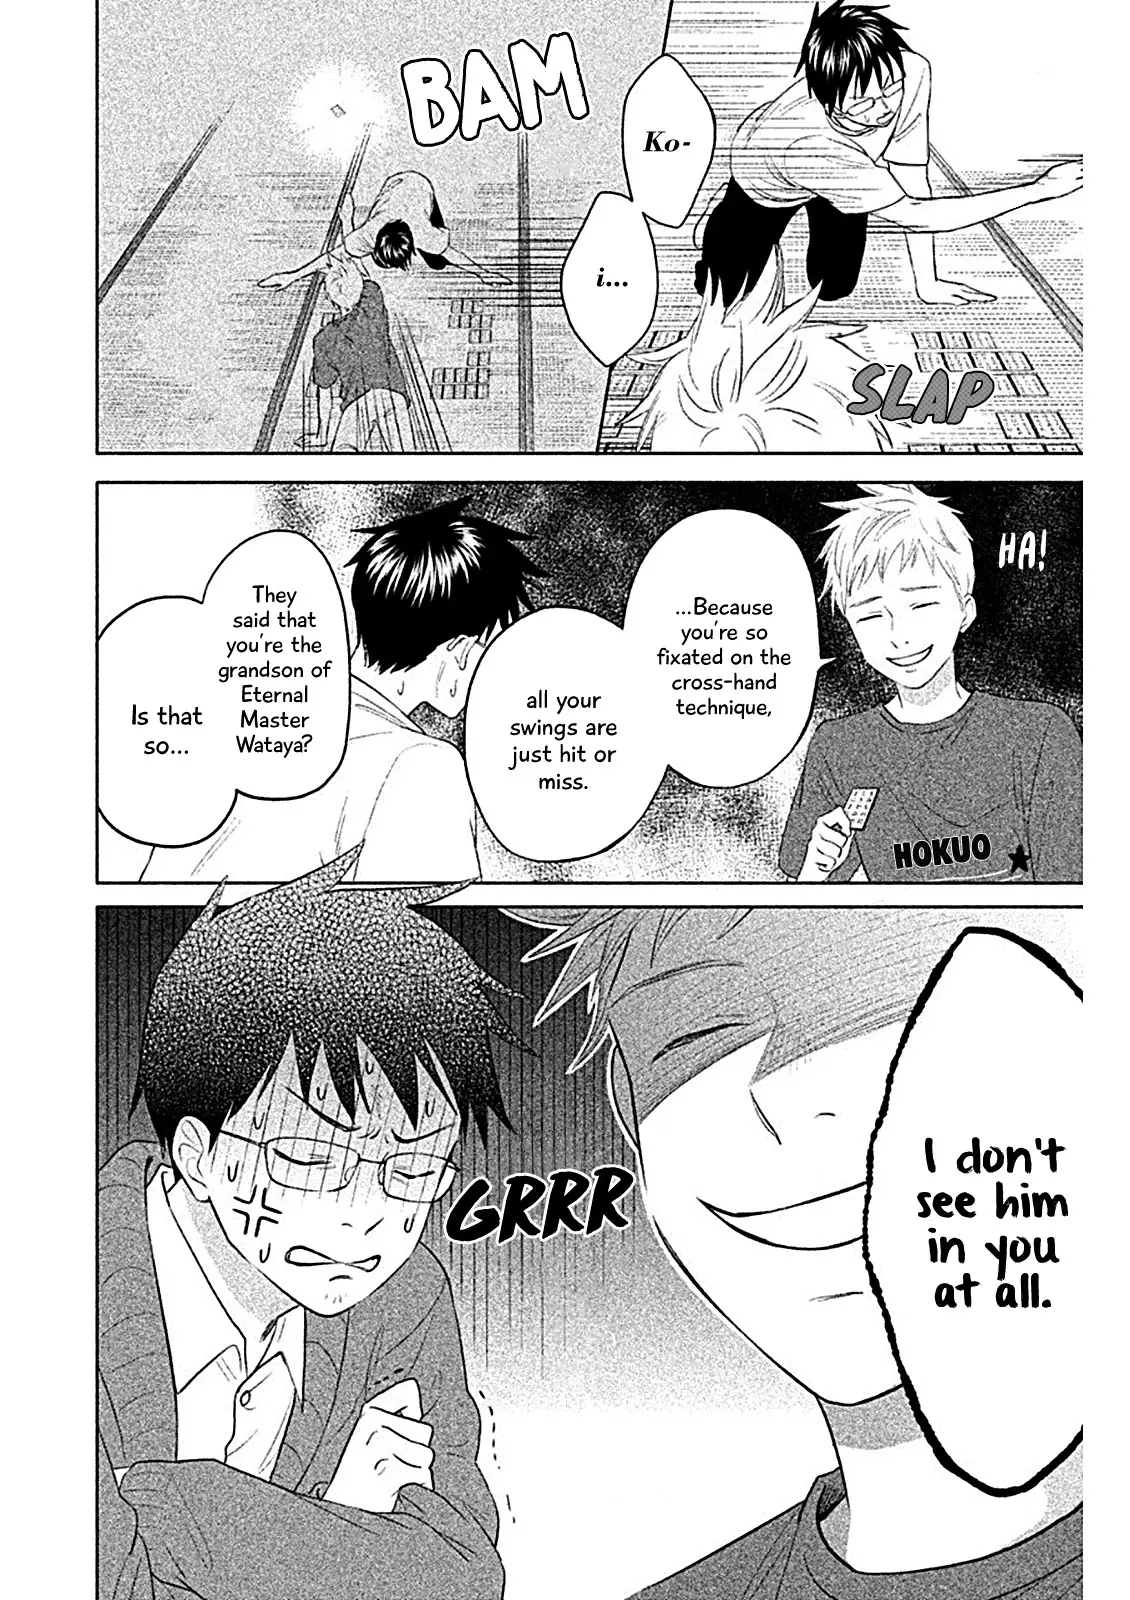 Chihayafuru: Middle School Arc - 7 page 8